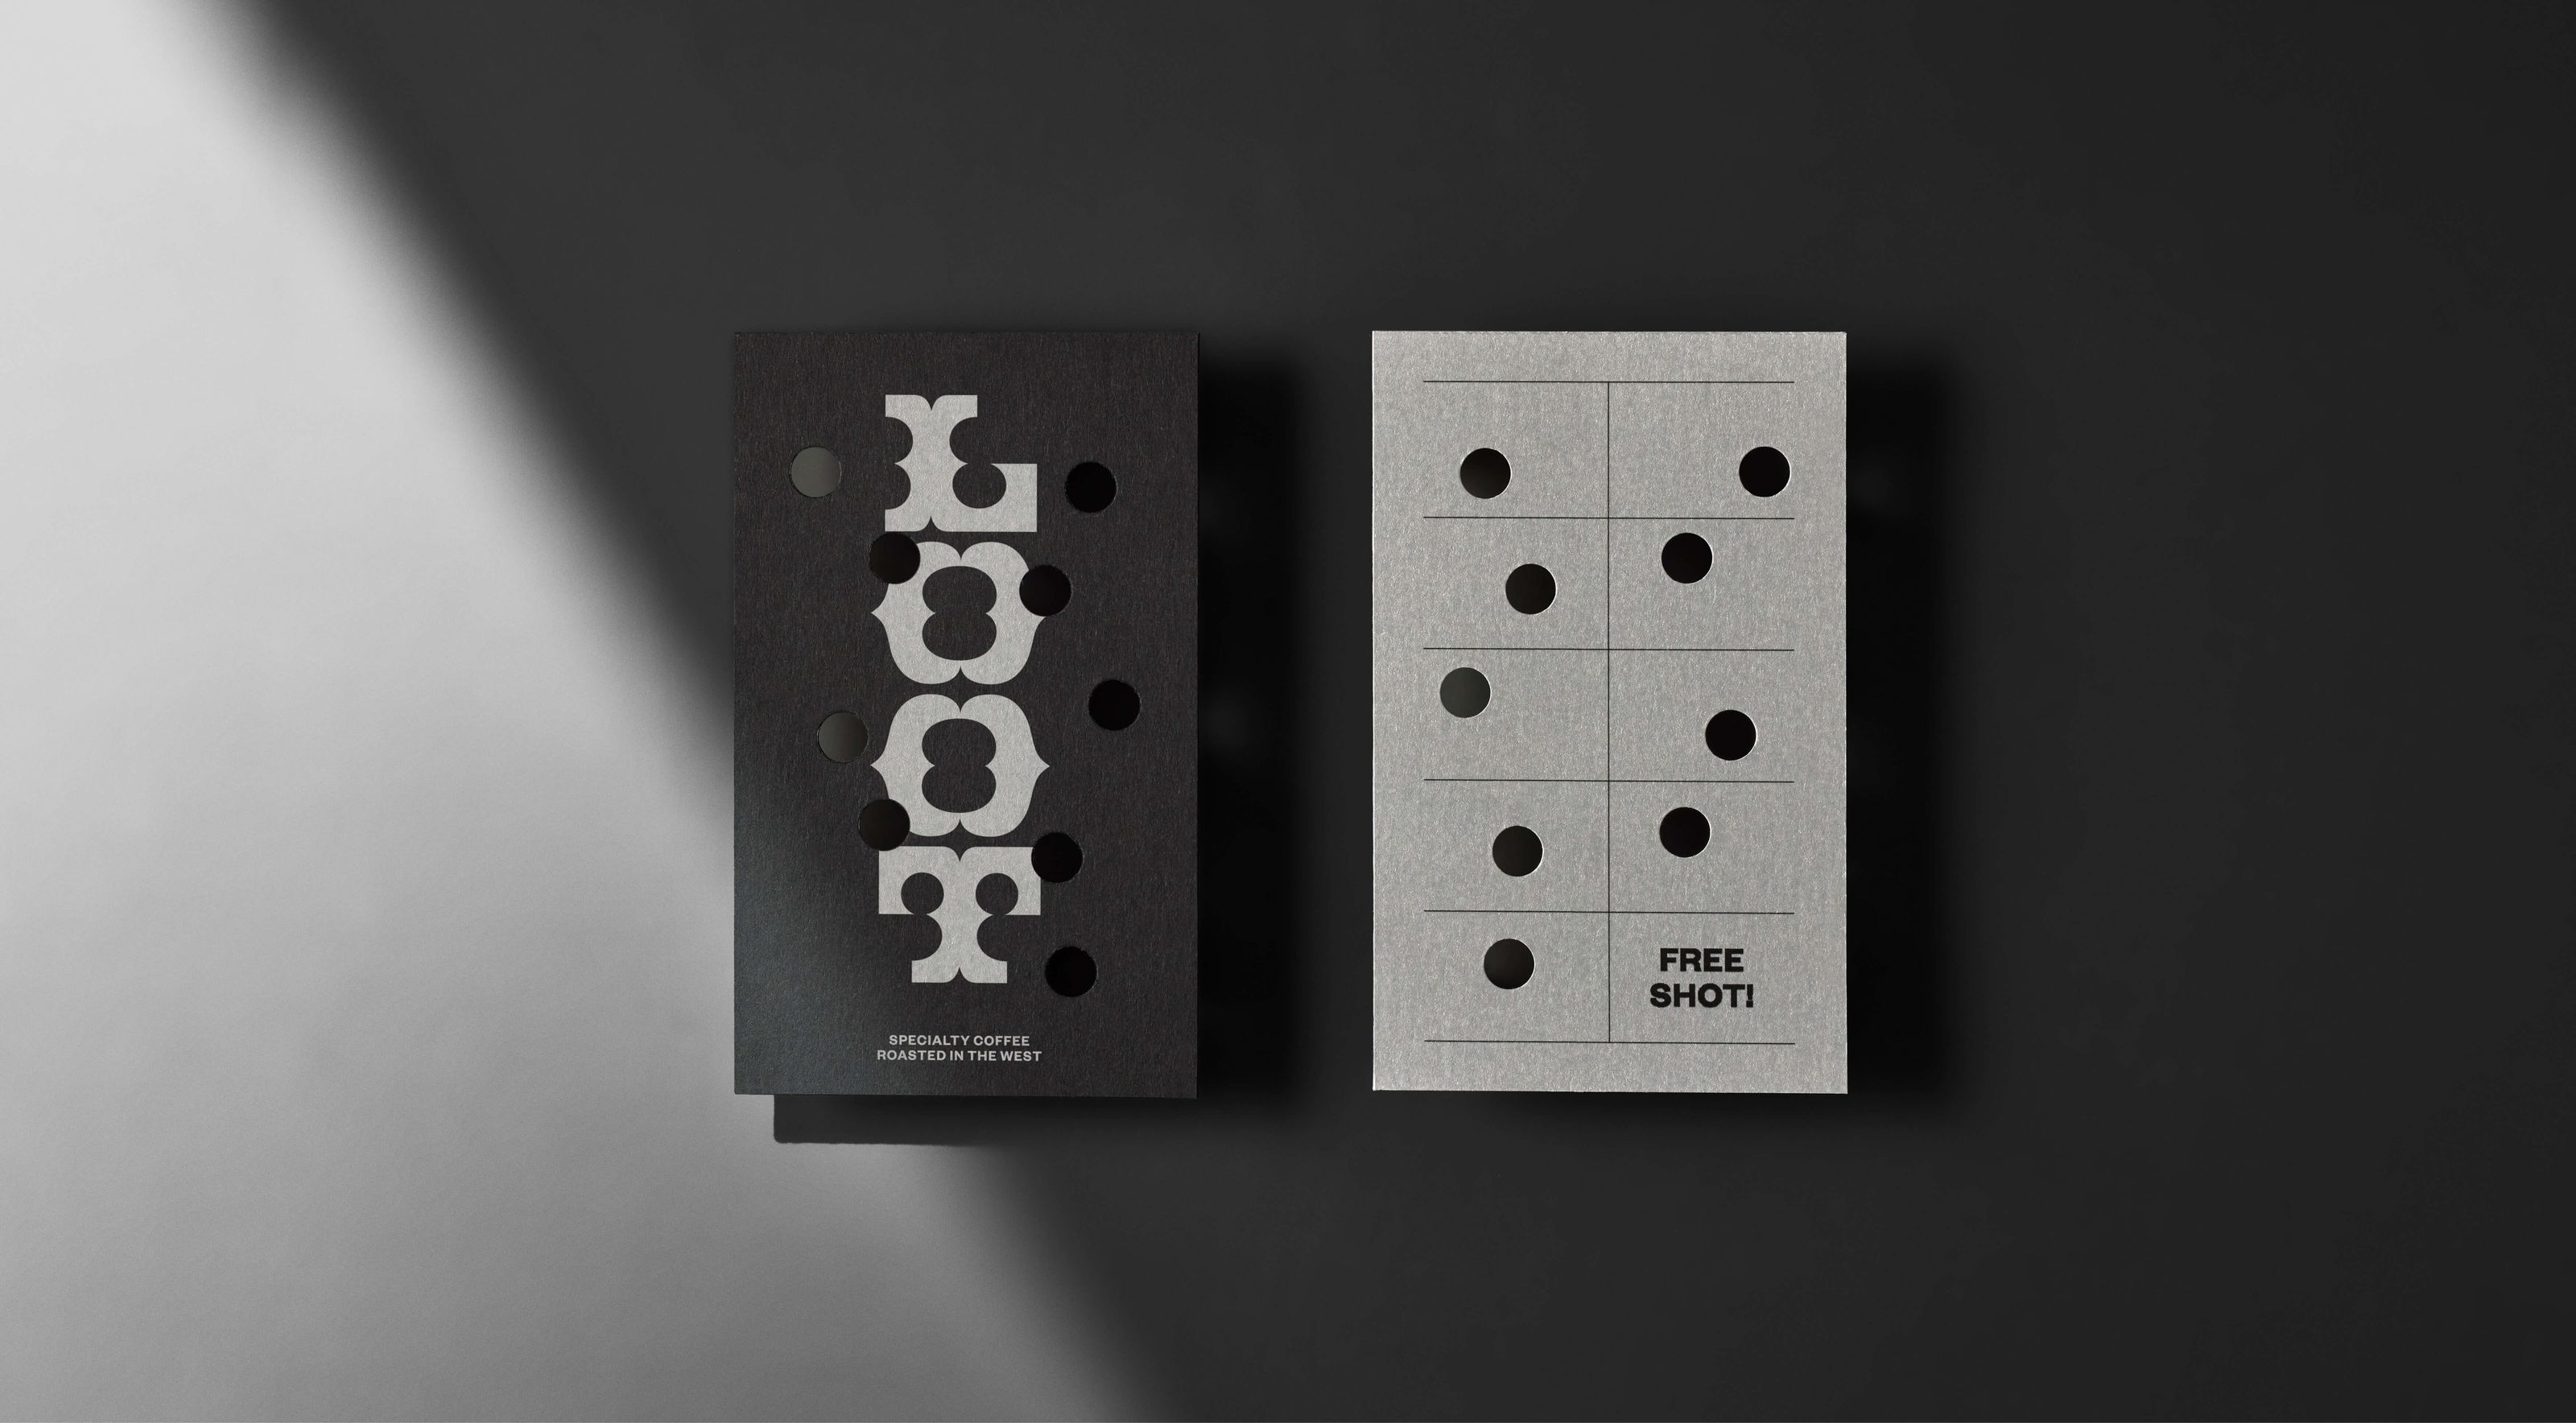 Logotype, packaging, merchandise and website design by Seachange Studio for Australia coffee roaster Loot